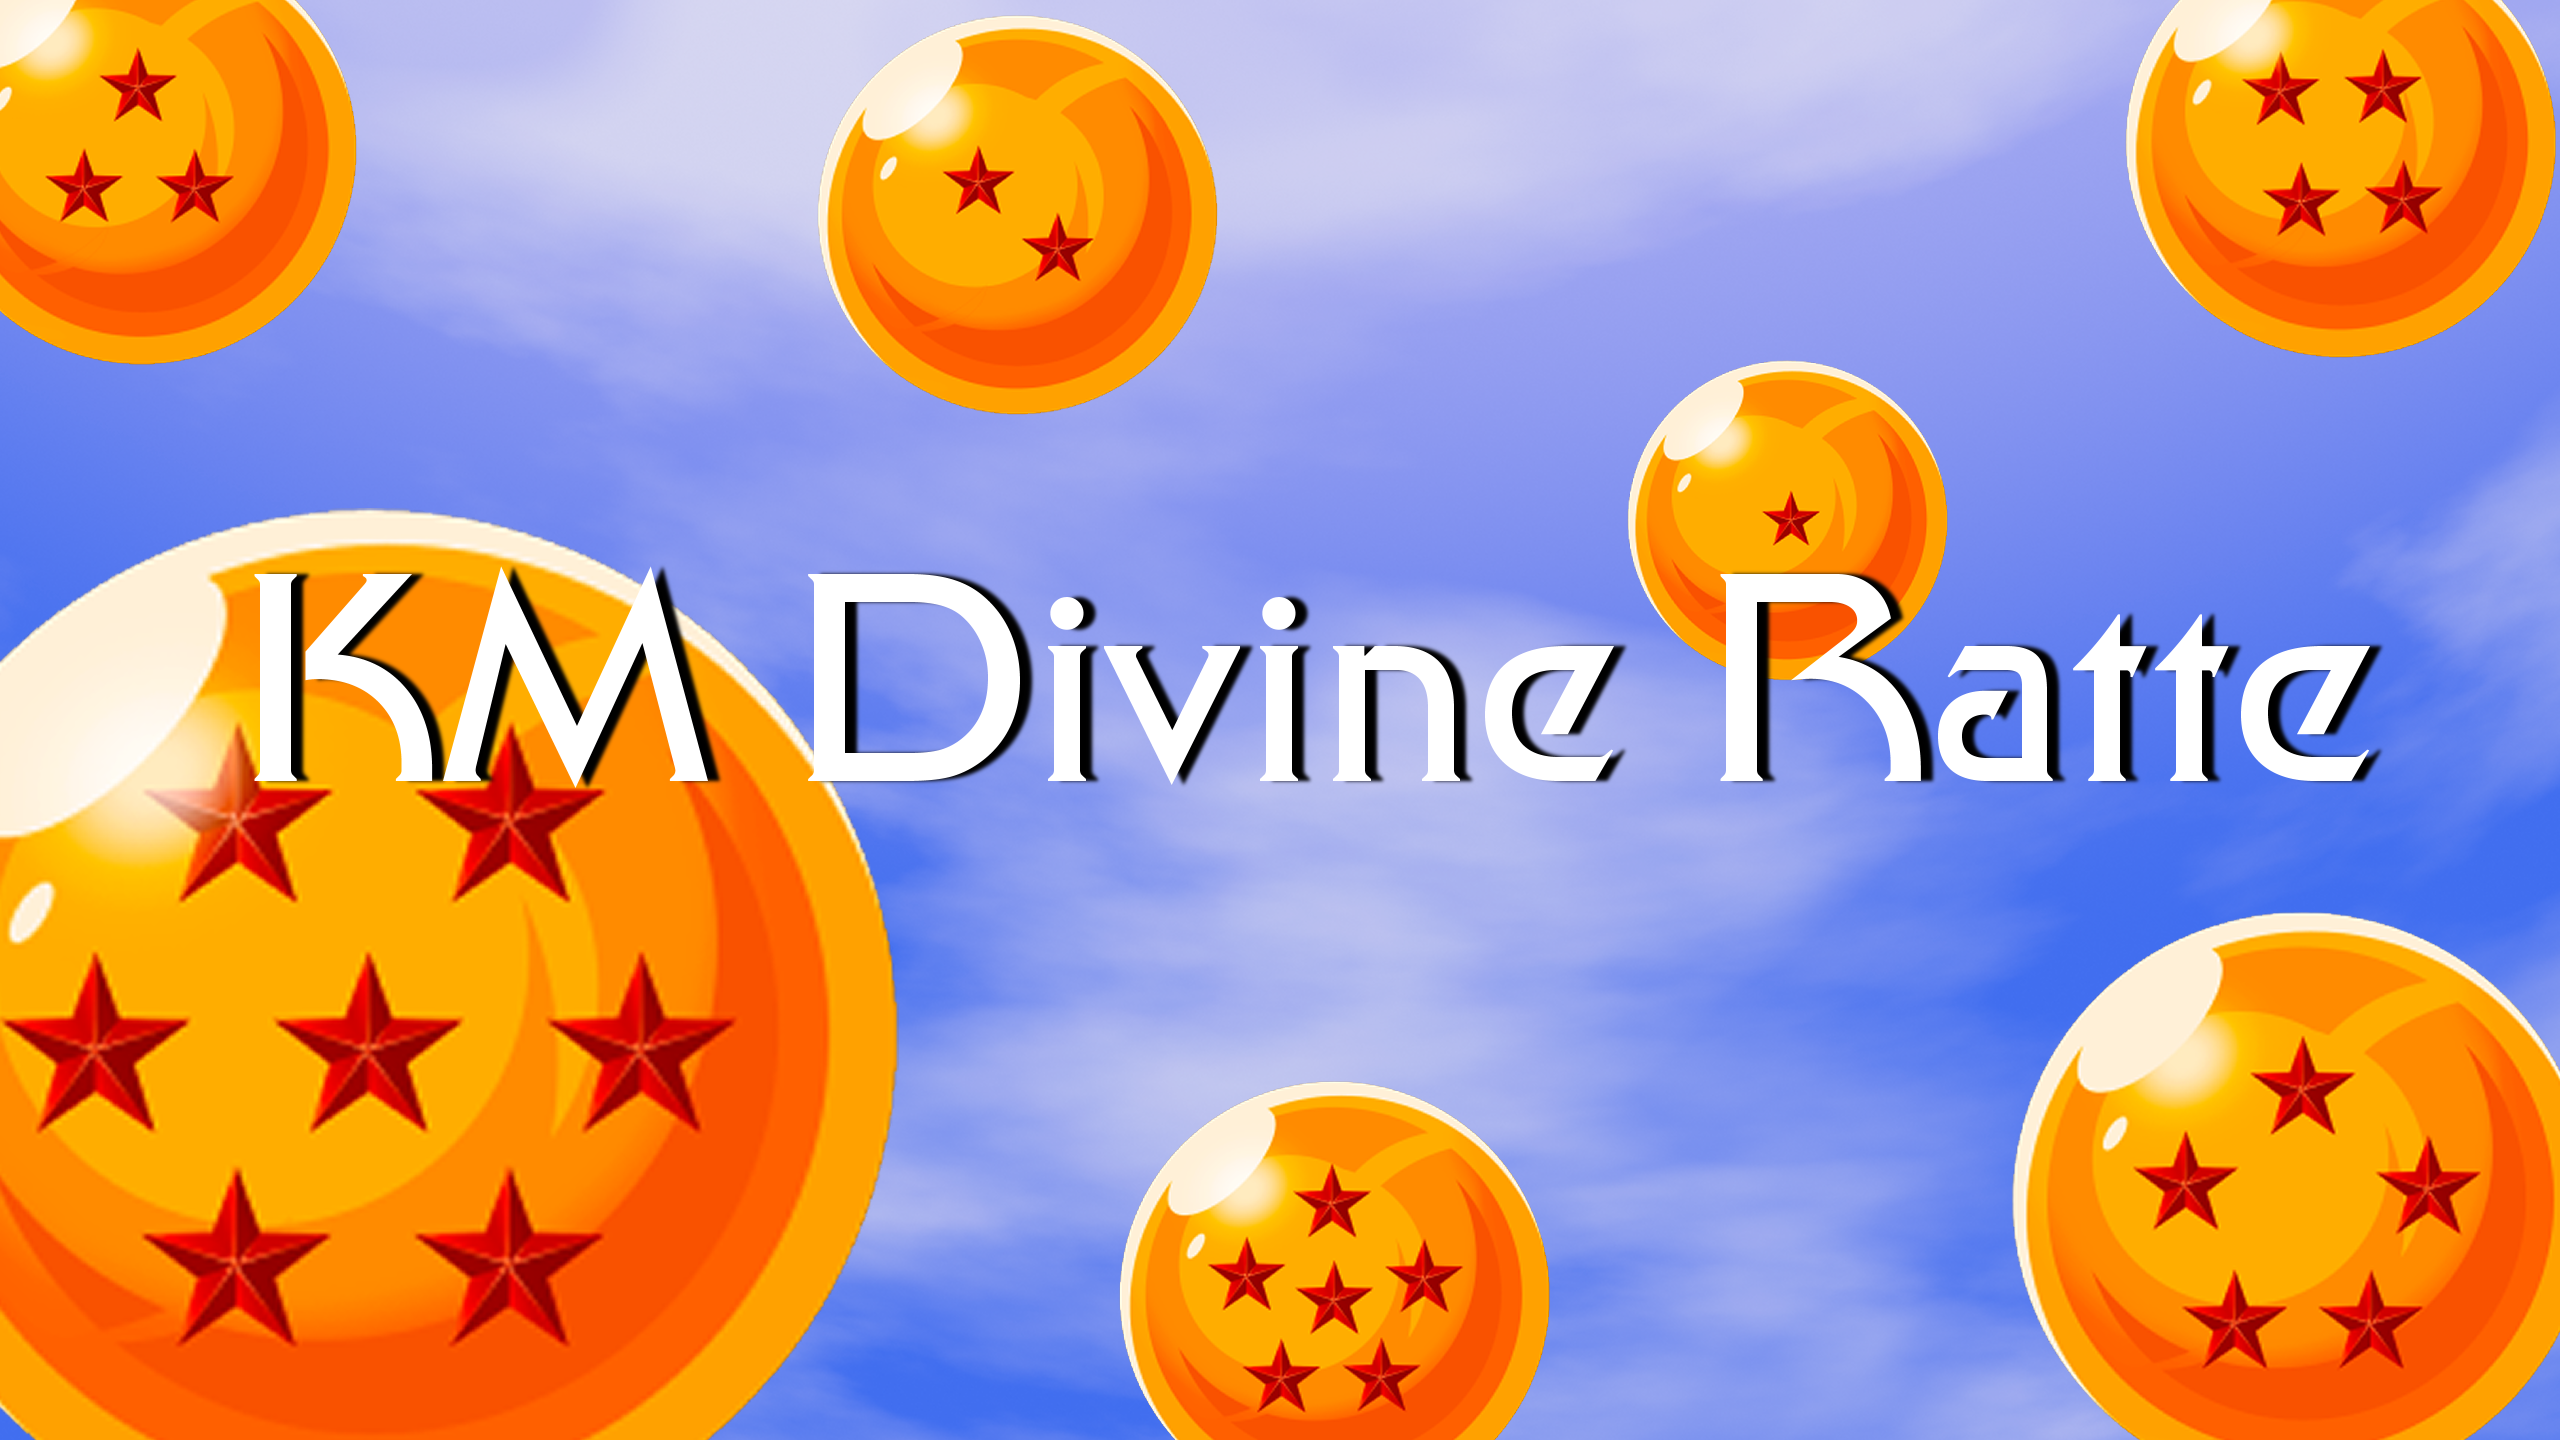 KM Divine Ratte